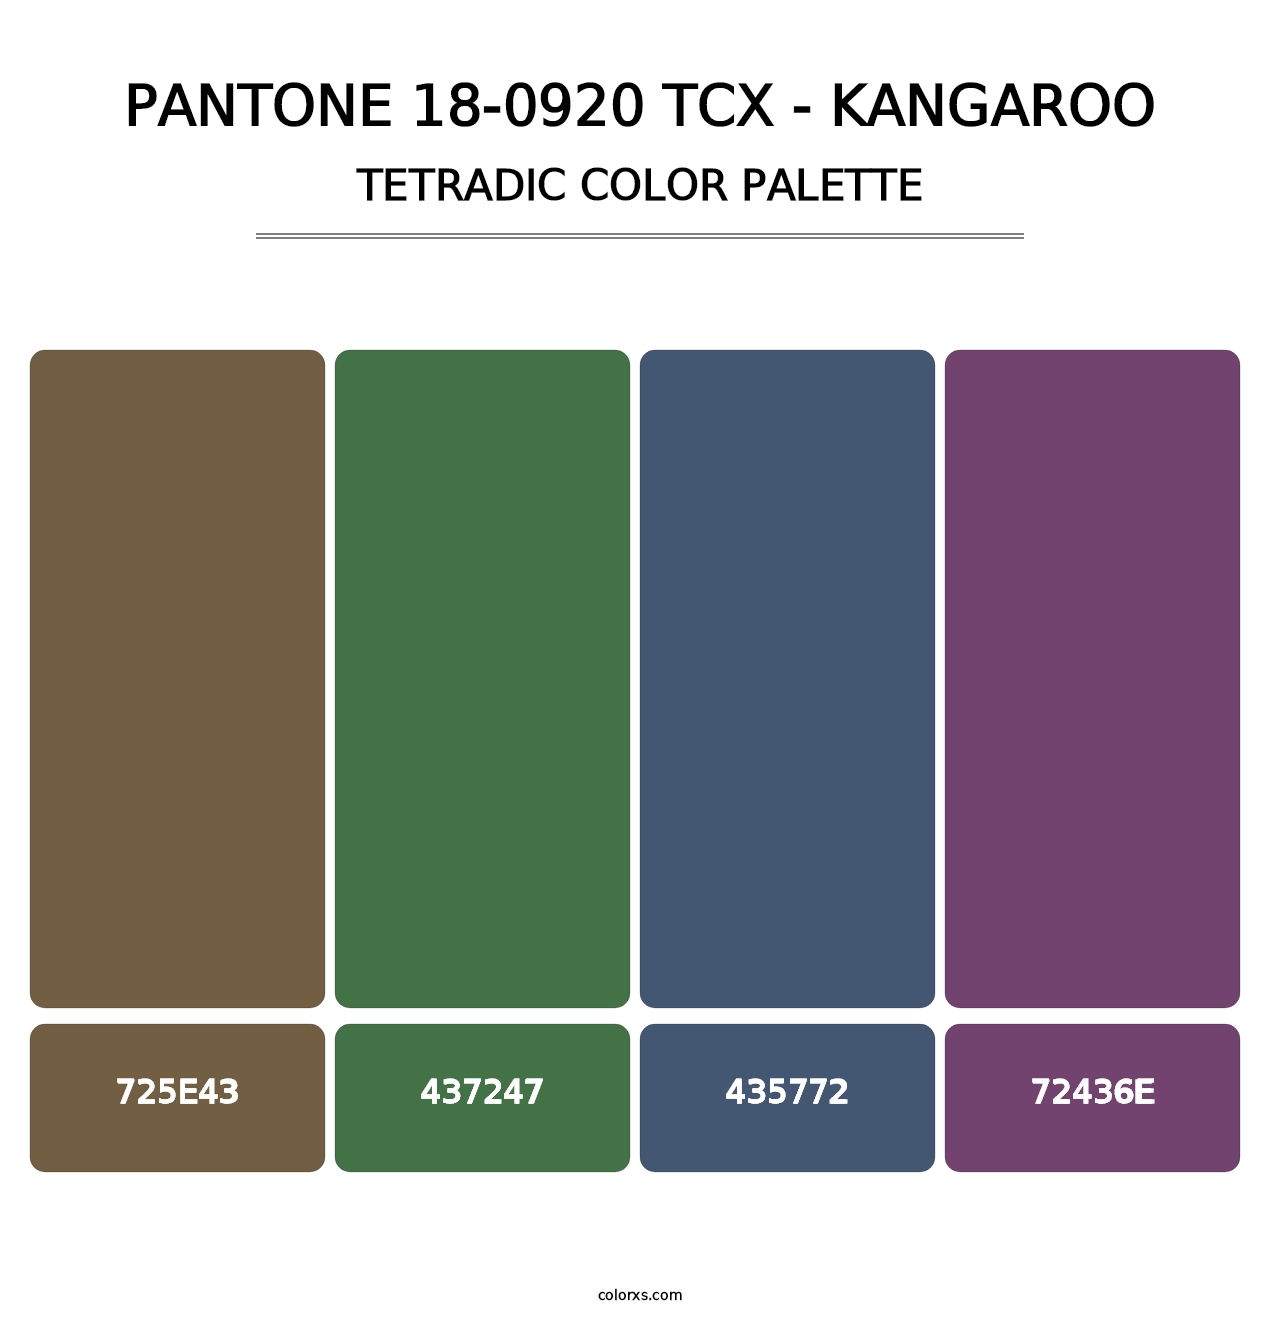 PANTONE 18-0920 TCX - Kangaroo - Tetradic Color Palette